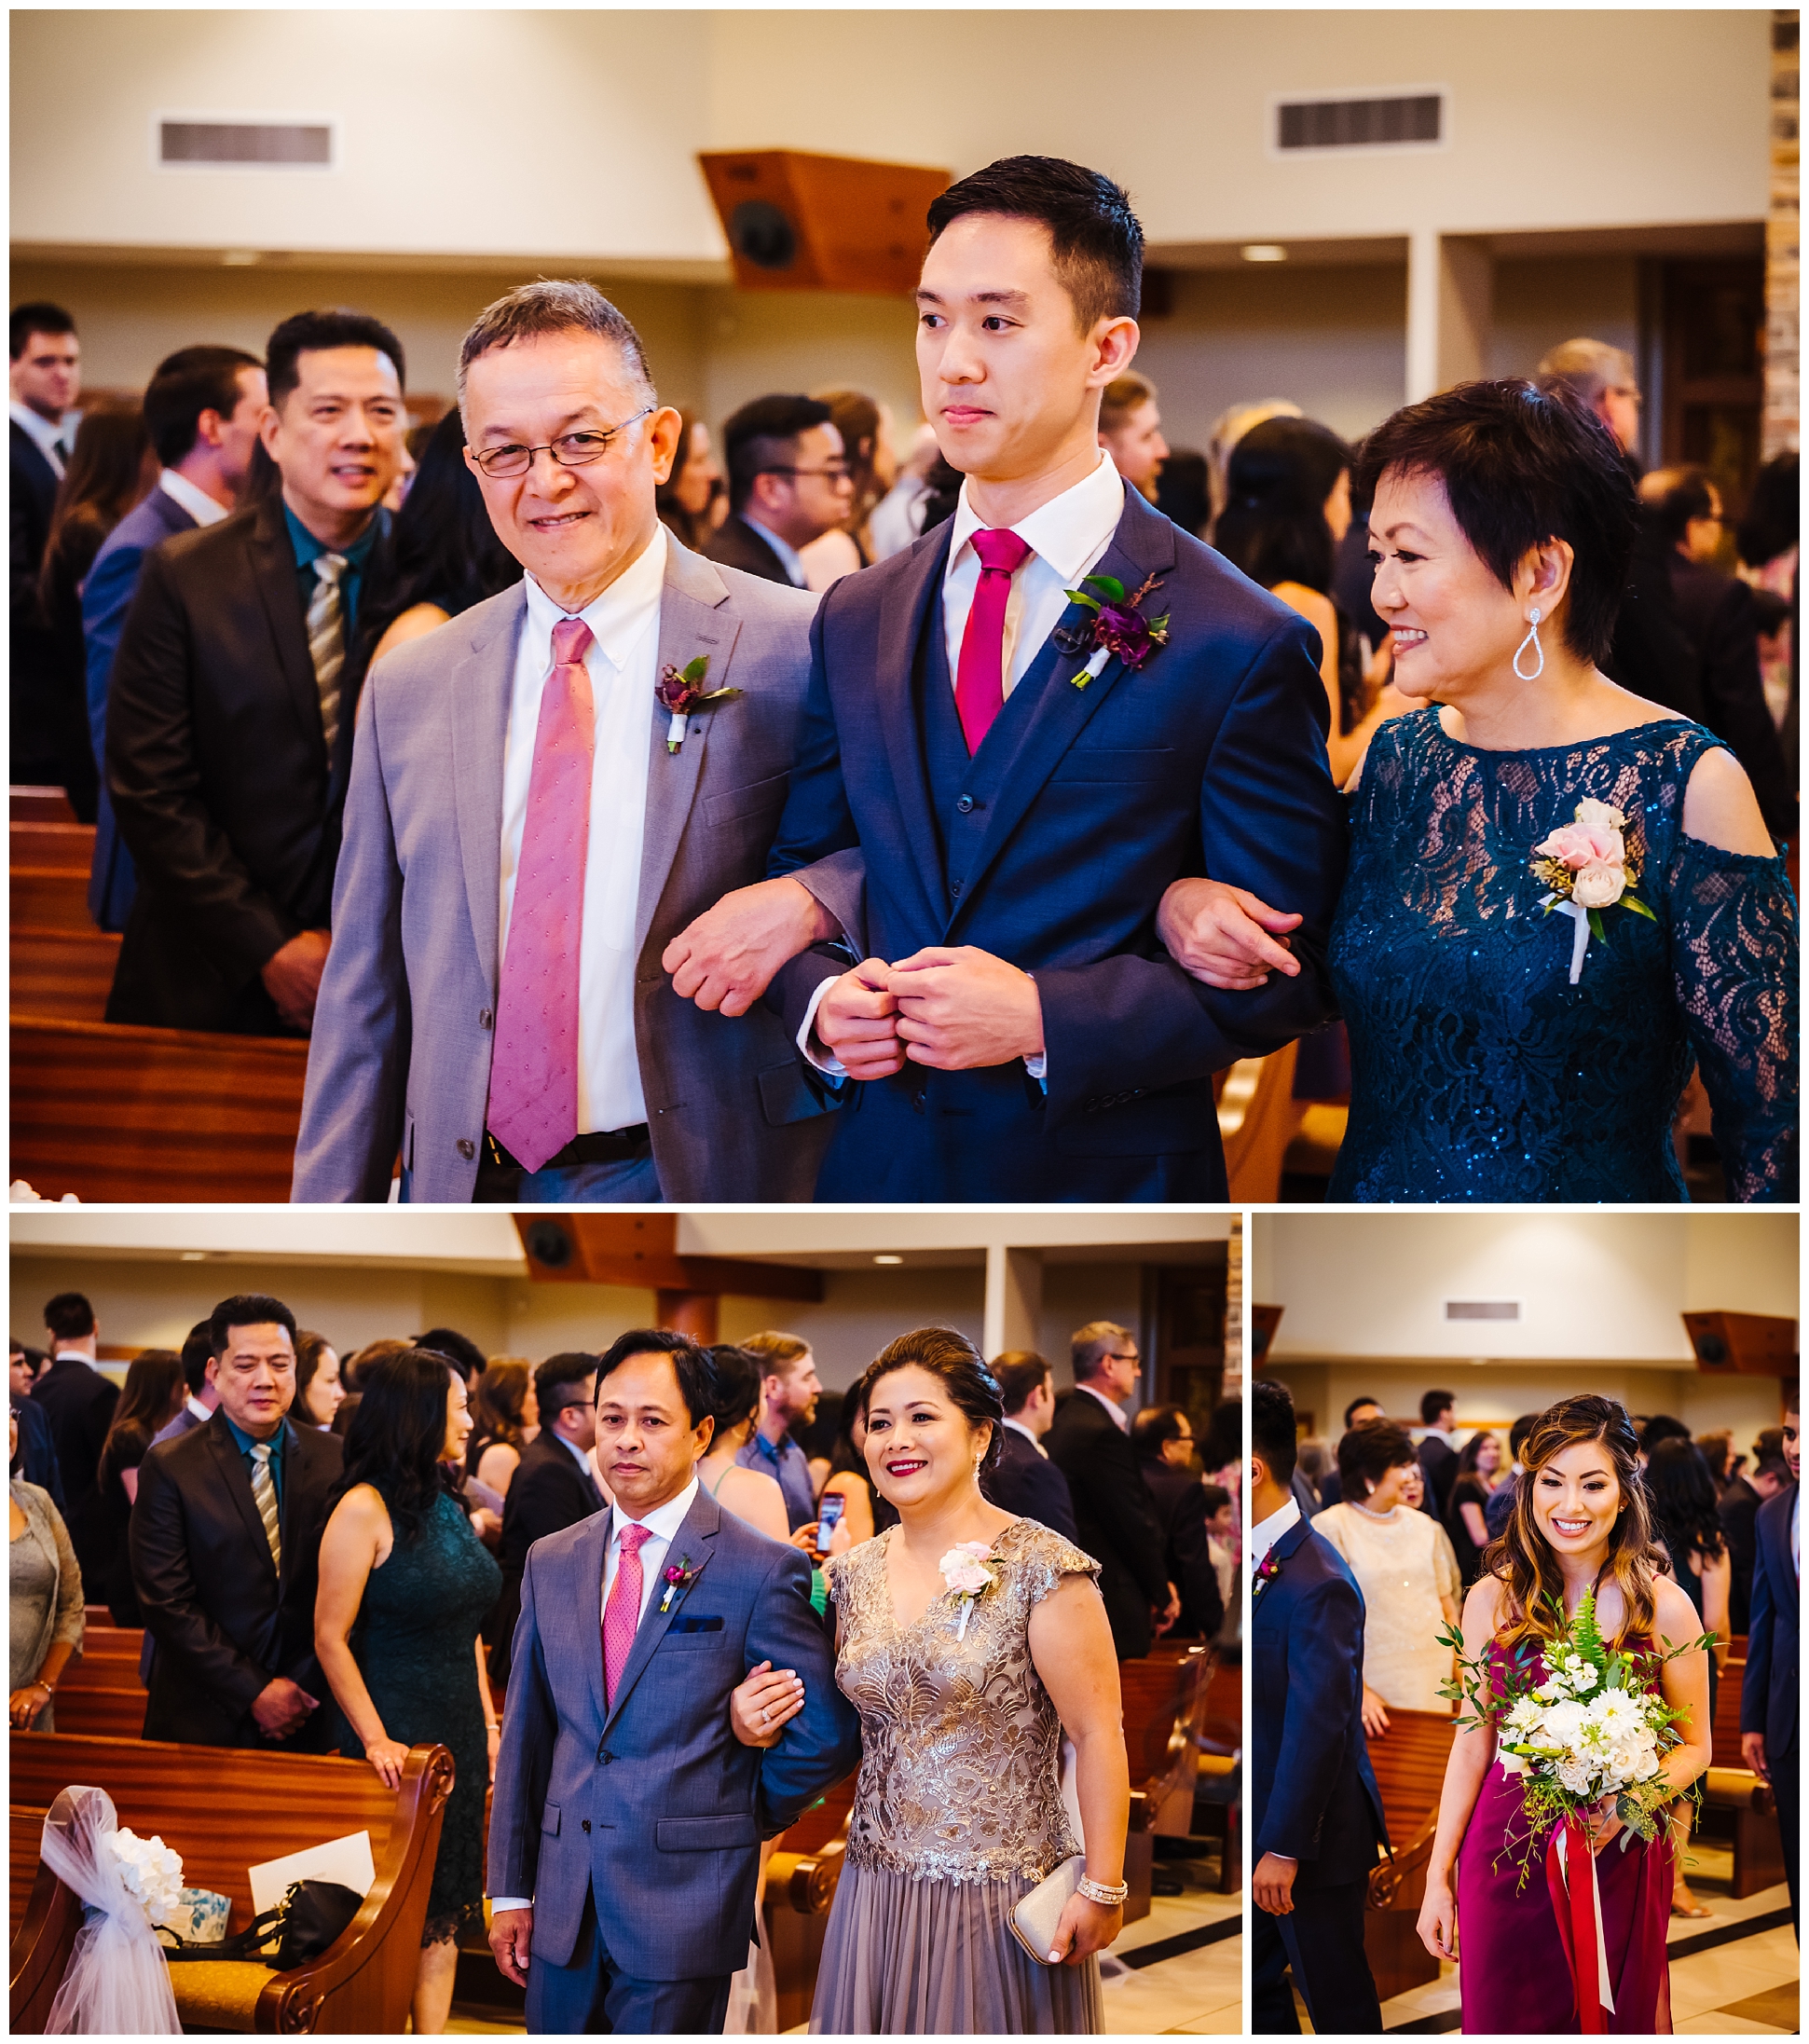 tampa-wedding-photographer-philipino-colorful-woods-ballroom-church-mass-confetti-fuscia_0027.jpg